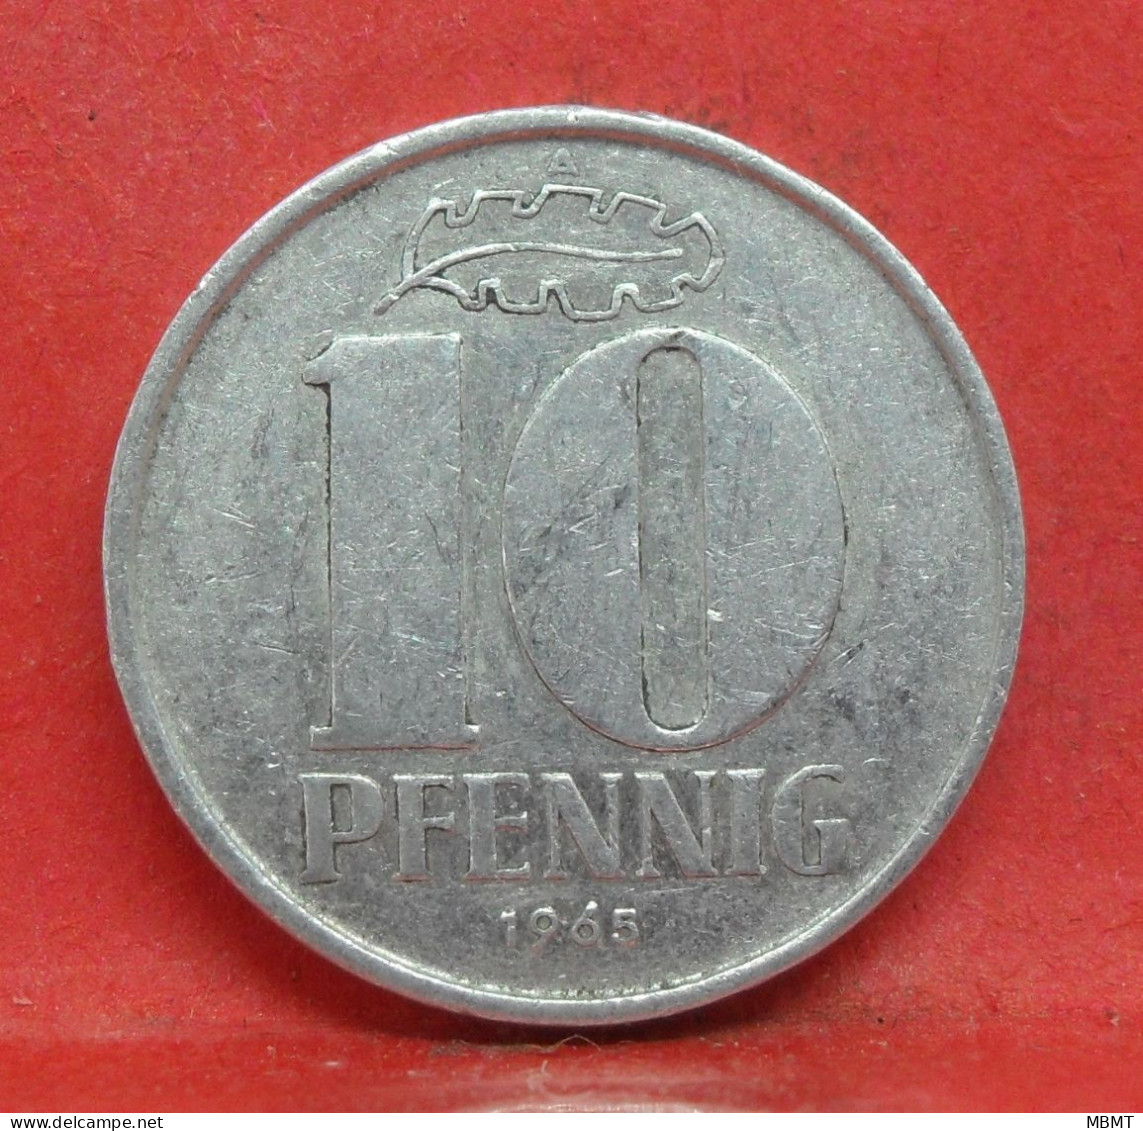 10 Pfennig 1965 A - TTB - Pièce Monnaie Allemagne - Article N°1533 - 10 Pfennig